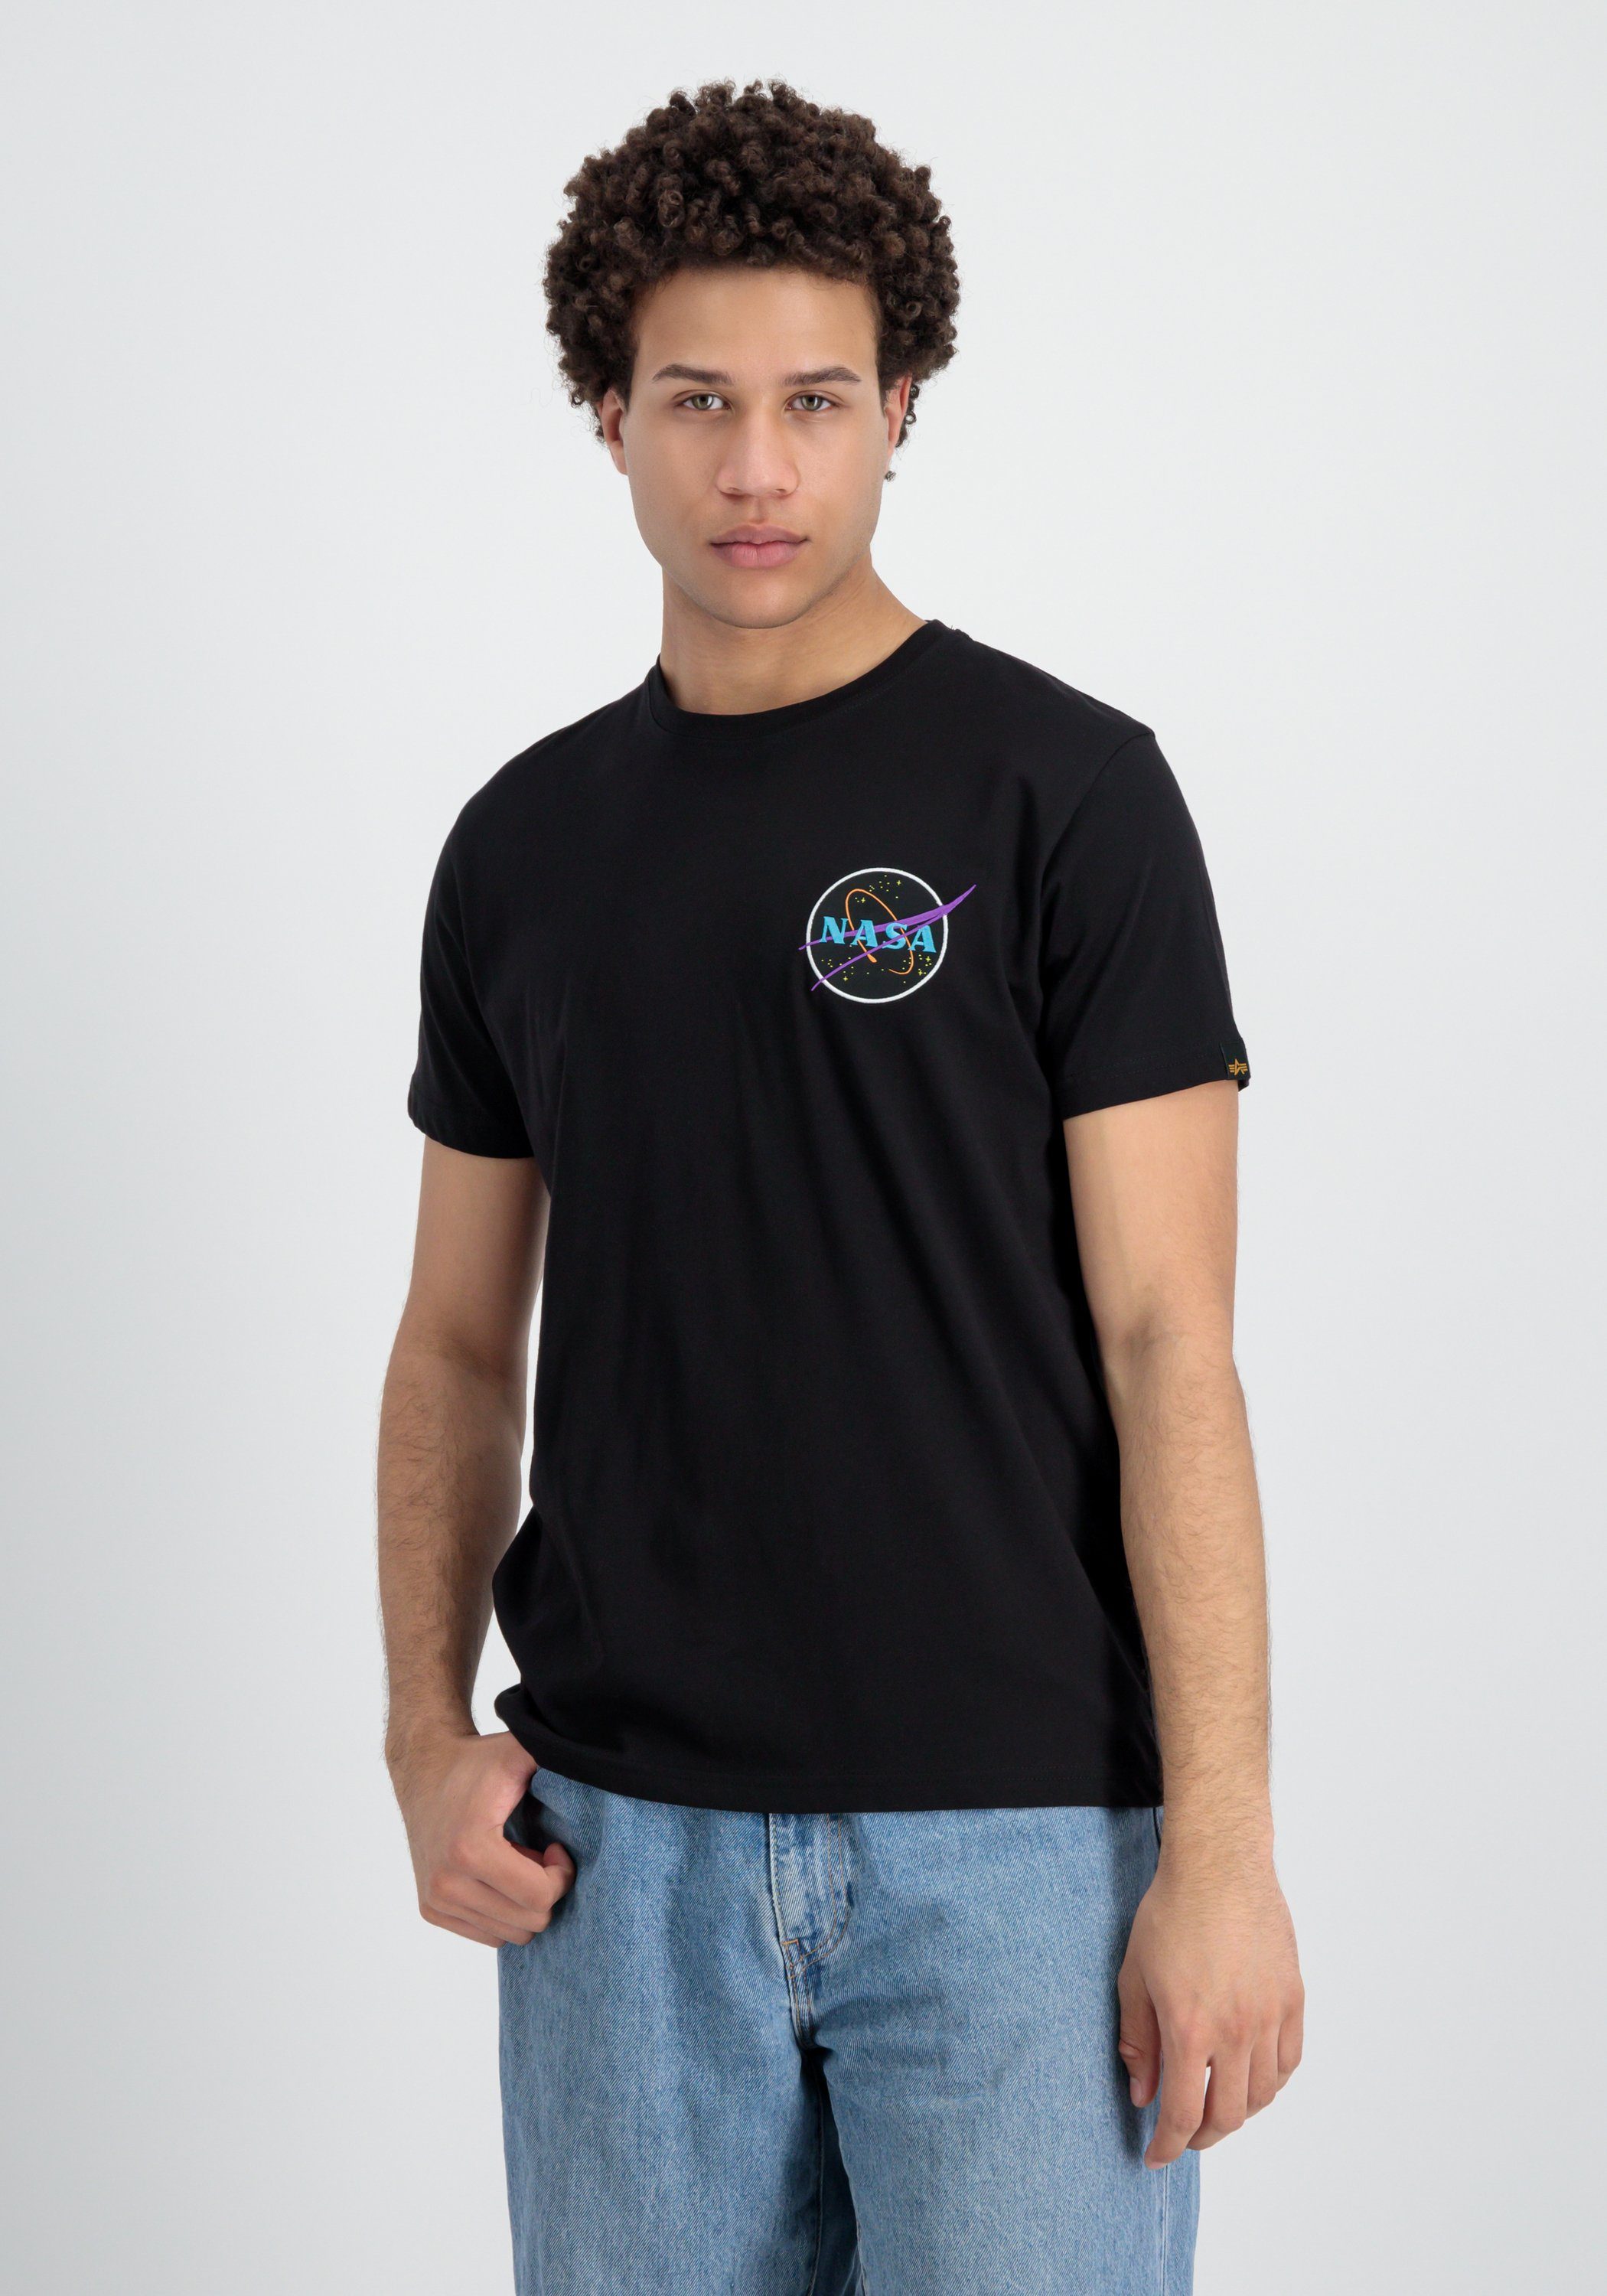 Alpha Industries T-shirt Men T-Shirts Space Shuttle T